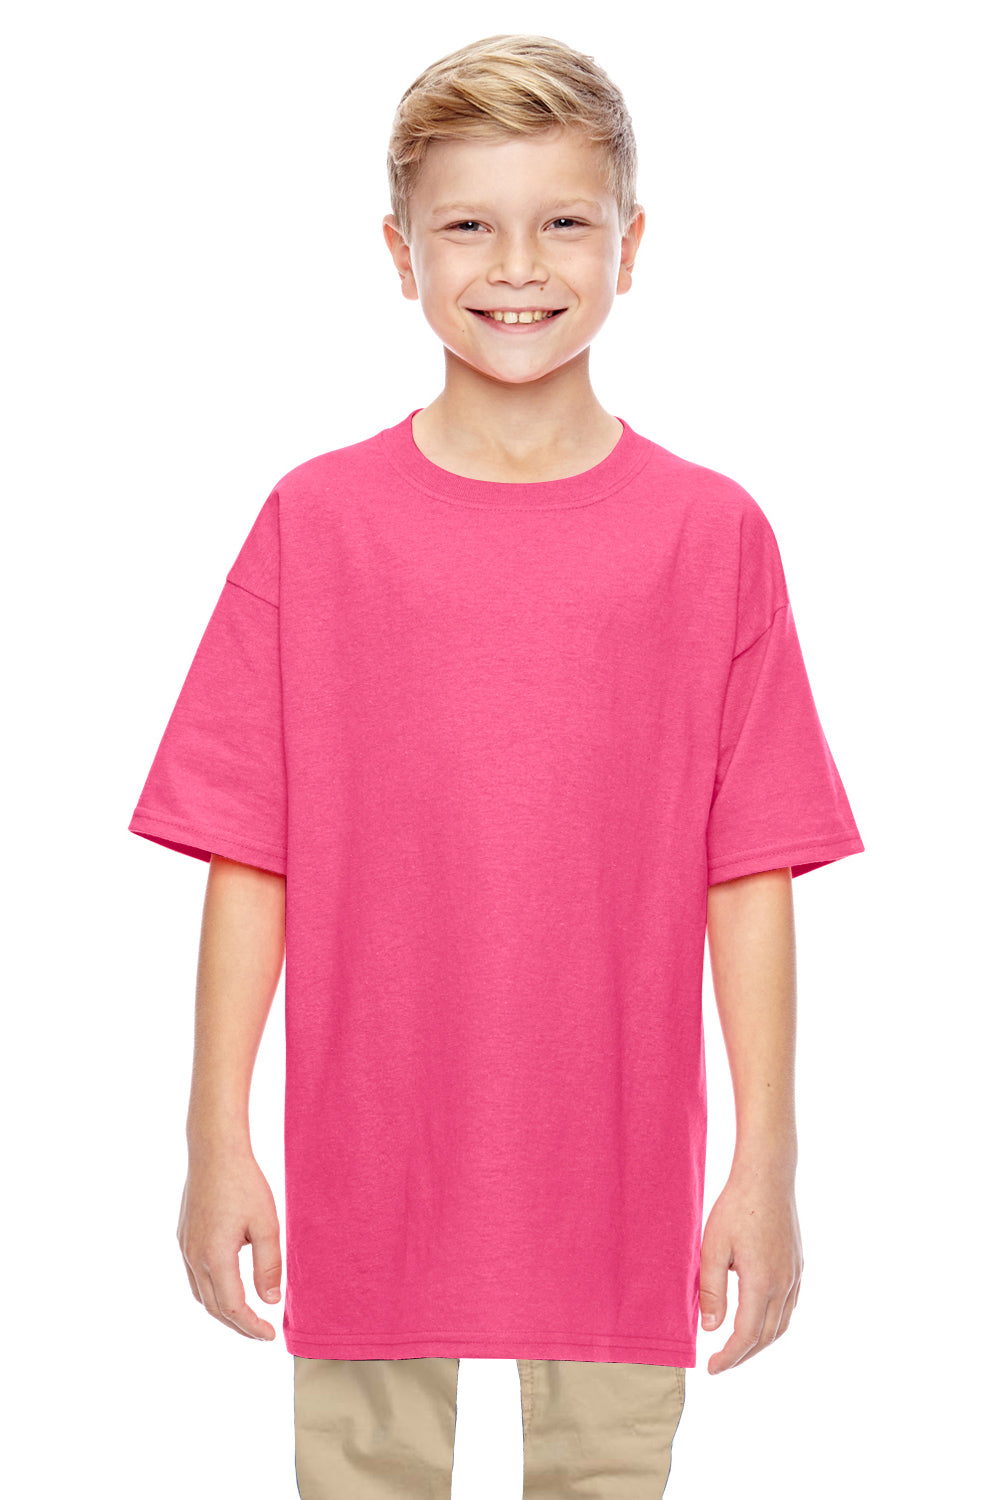 Gildan G500B Youth Short Sleeve Crewneck T-Shirt Safety Pink Front